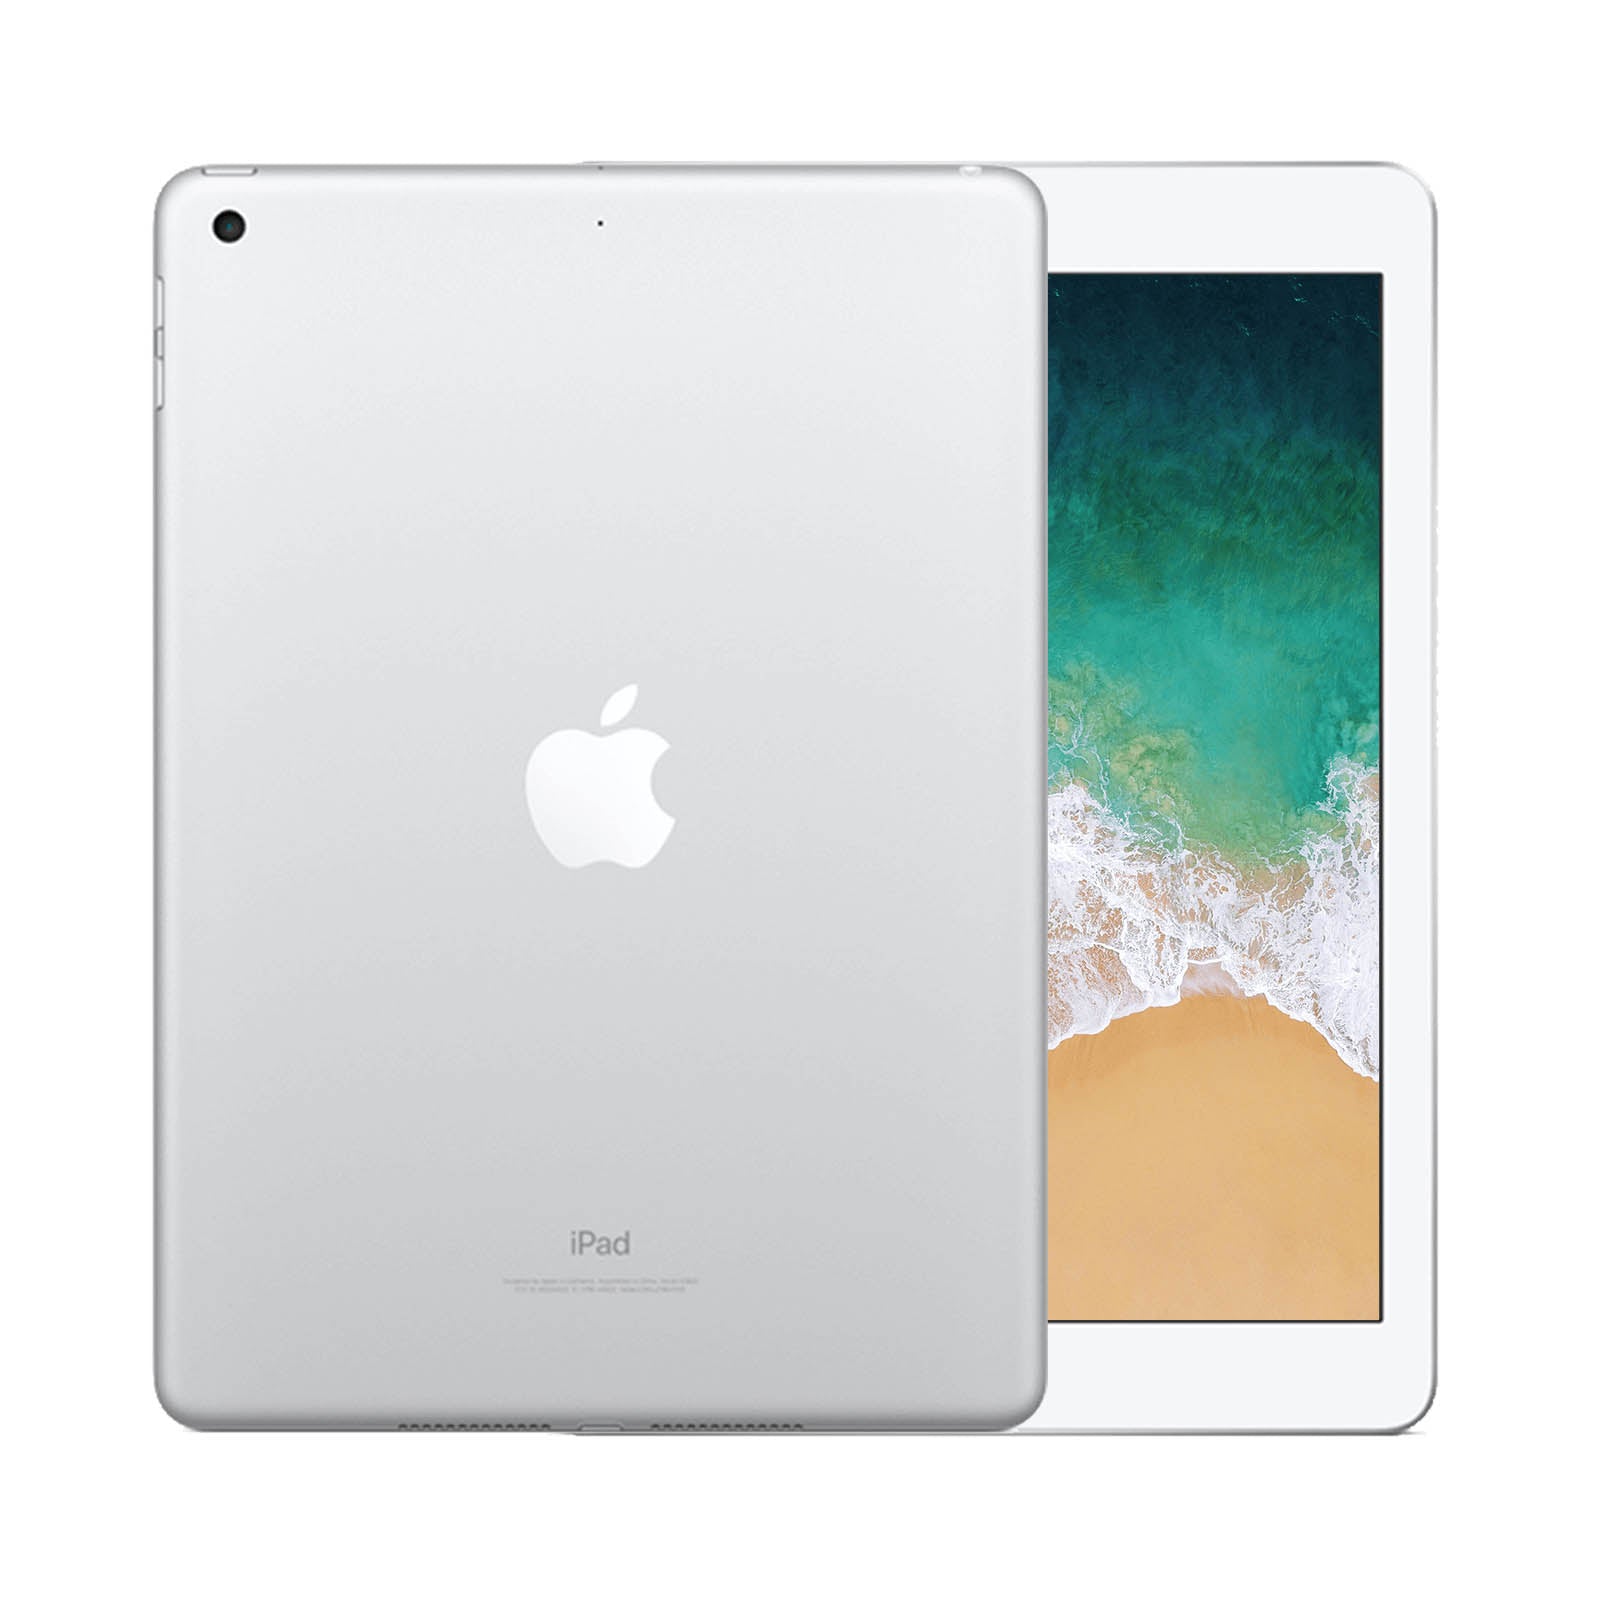 Apple iPad 5 32GB WiFi Space Grau - Gut